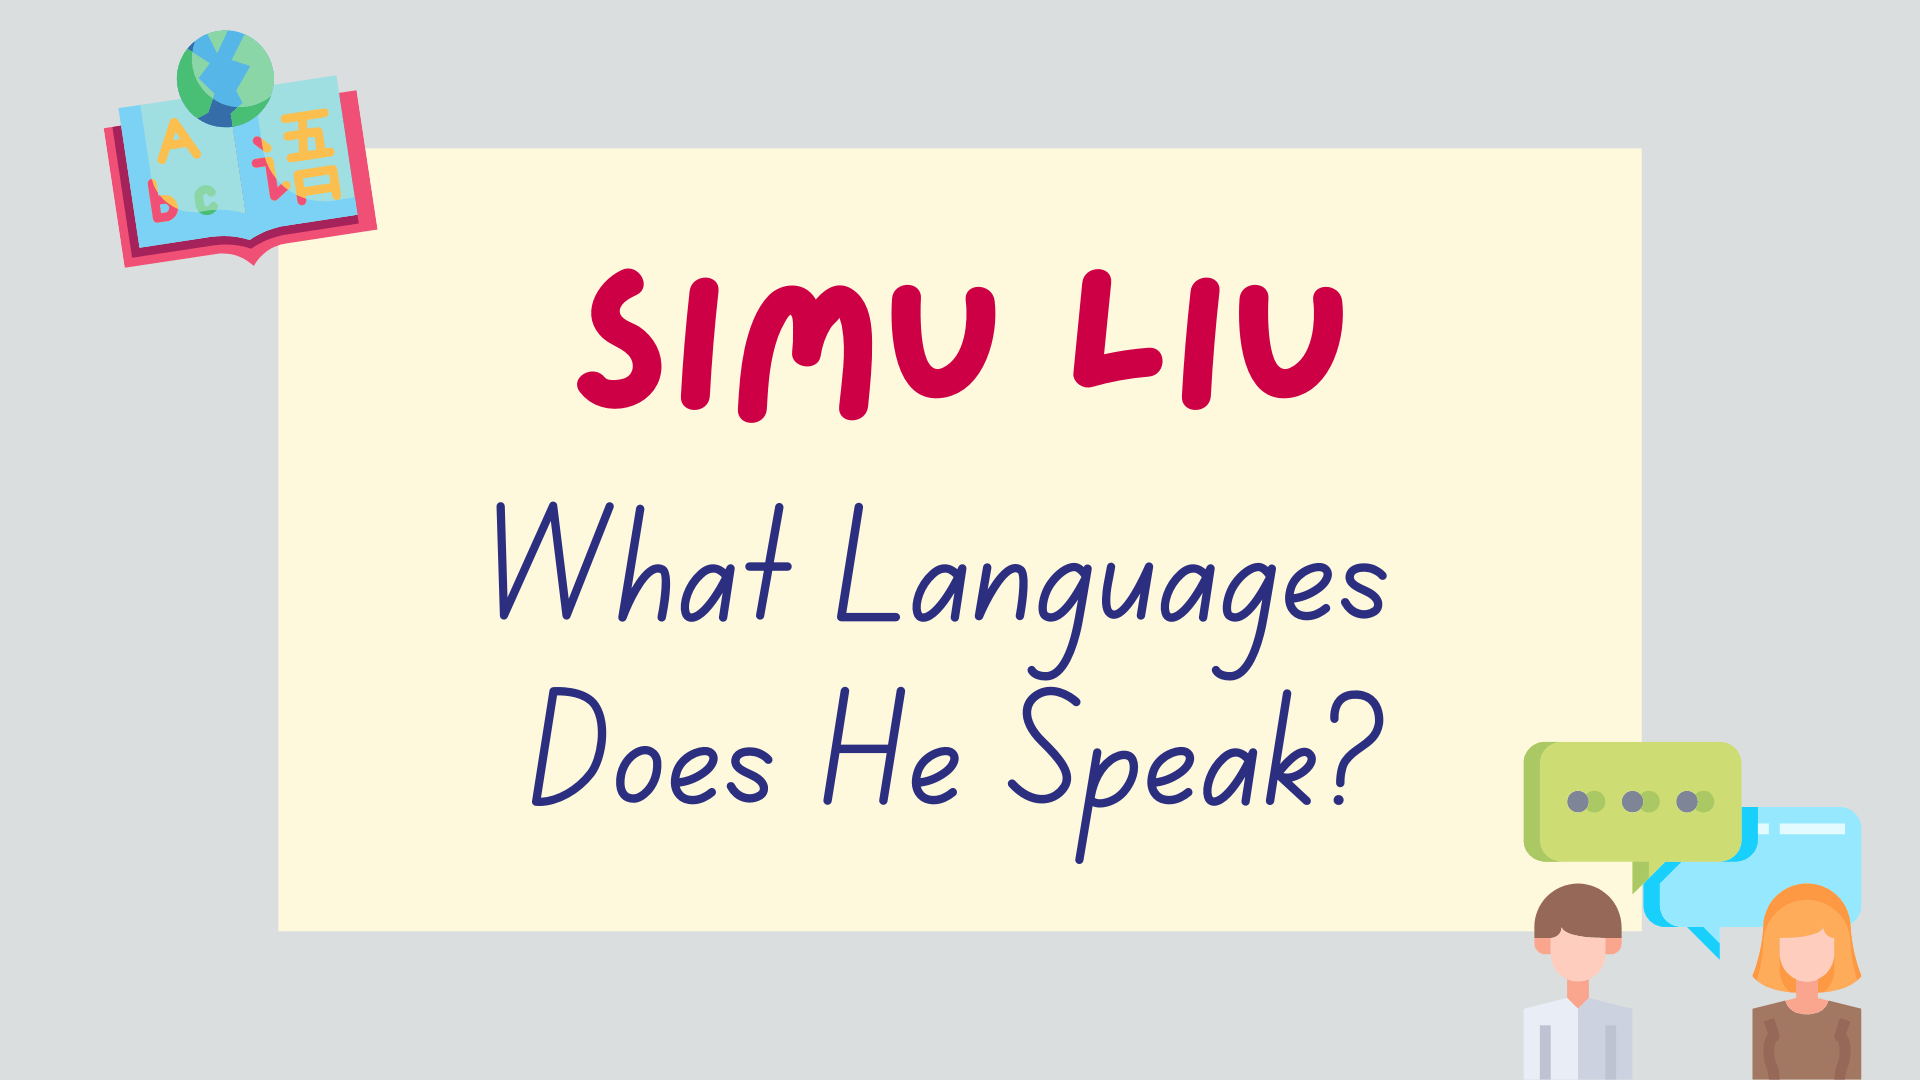 what languages does Simu Liu speak - featured image